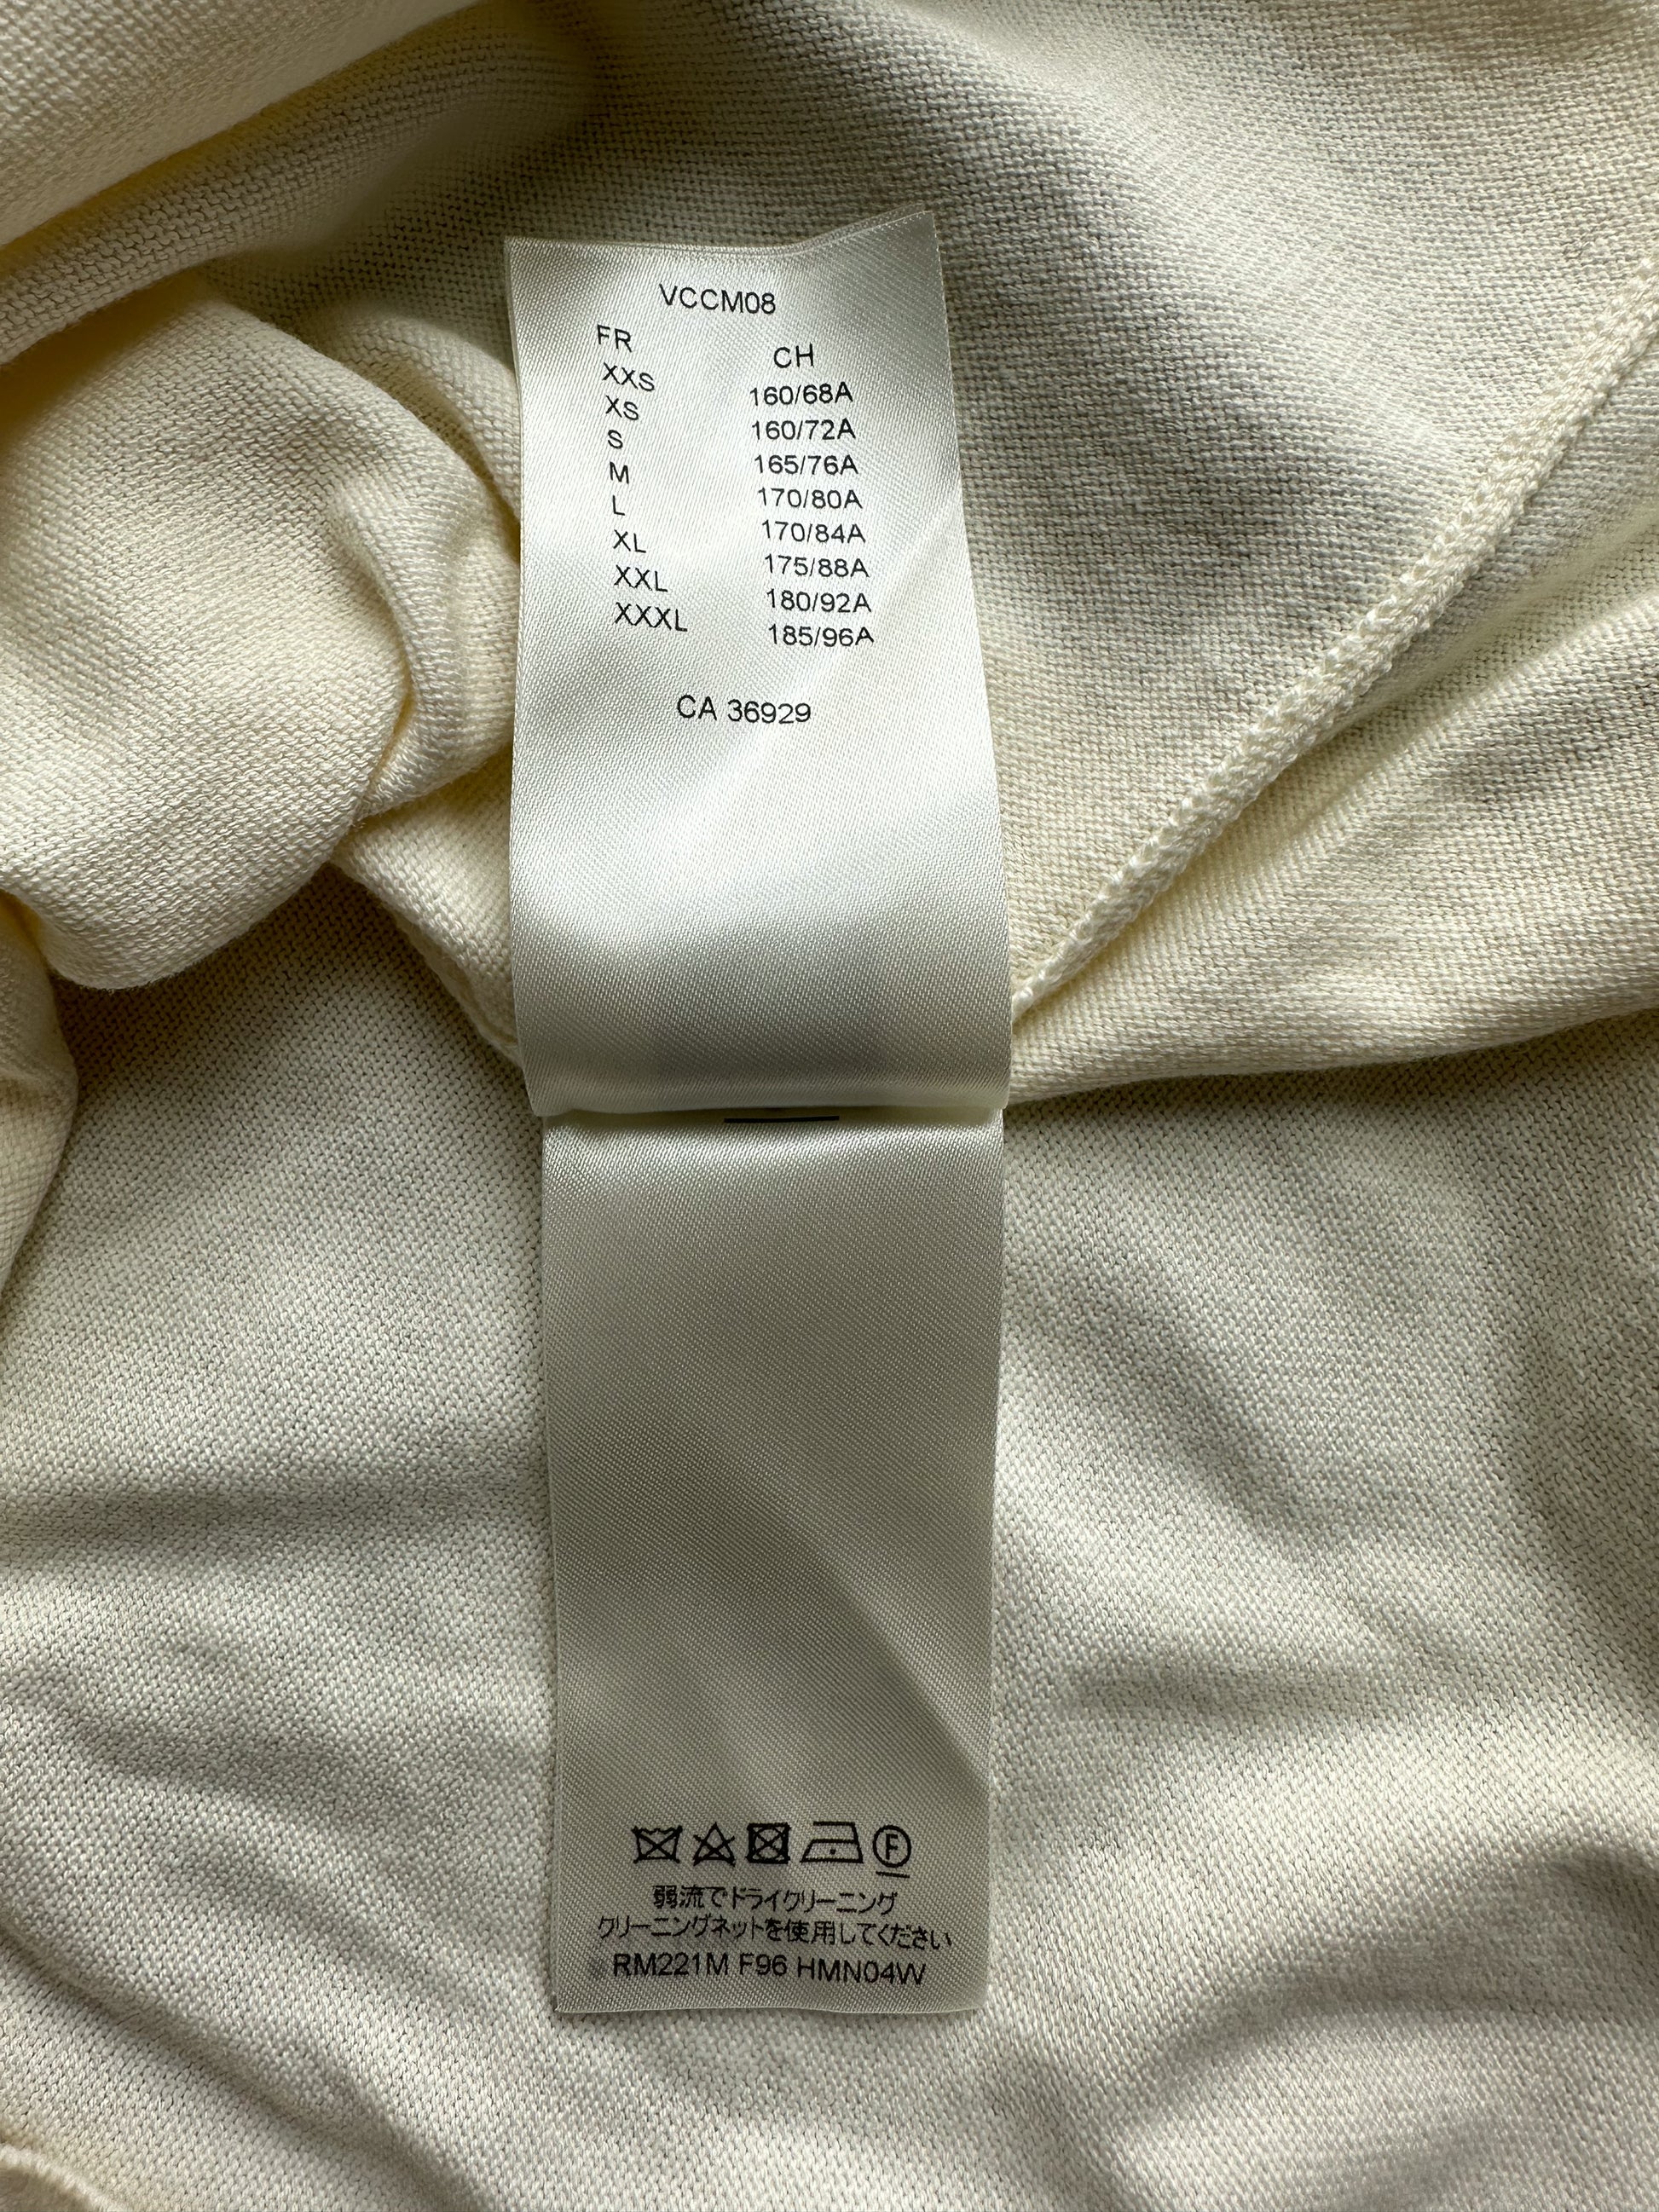 Louis Vuitton Louis Vuitton x Nigo Intarsia Knit Duck T-Shirt